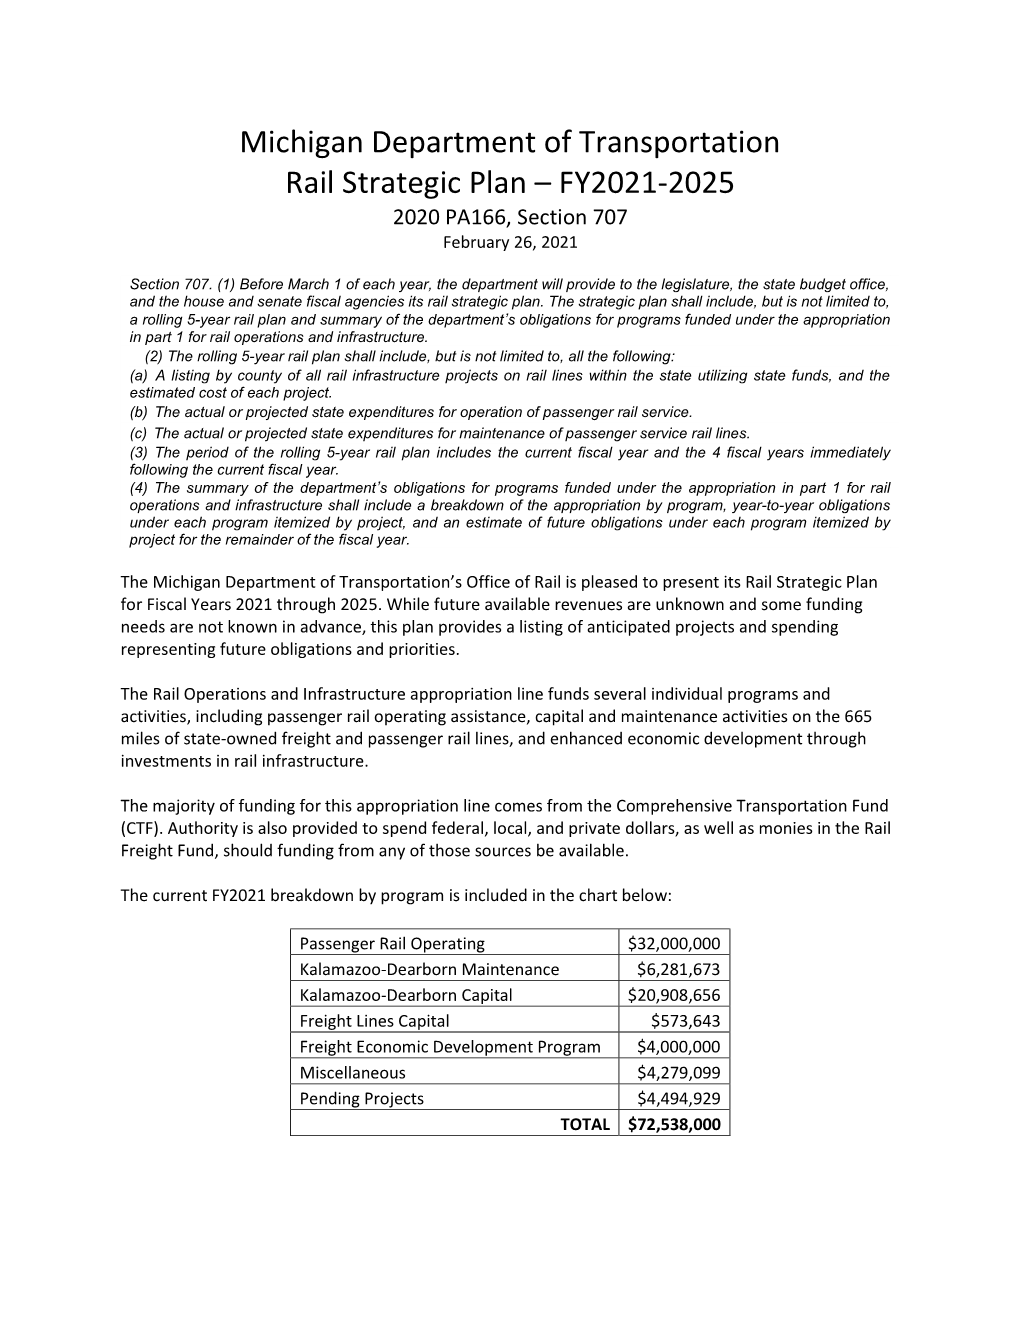 Section 707 FY21-25 Rail Strategic Plan